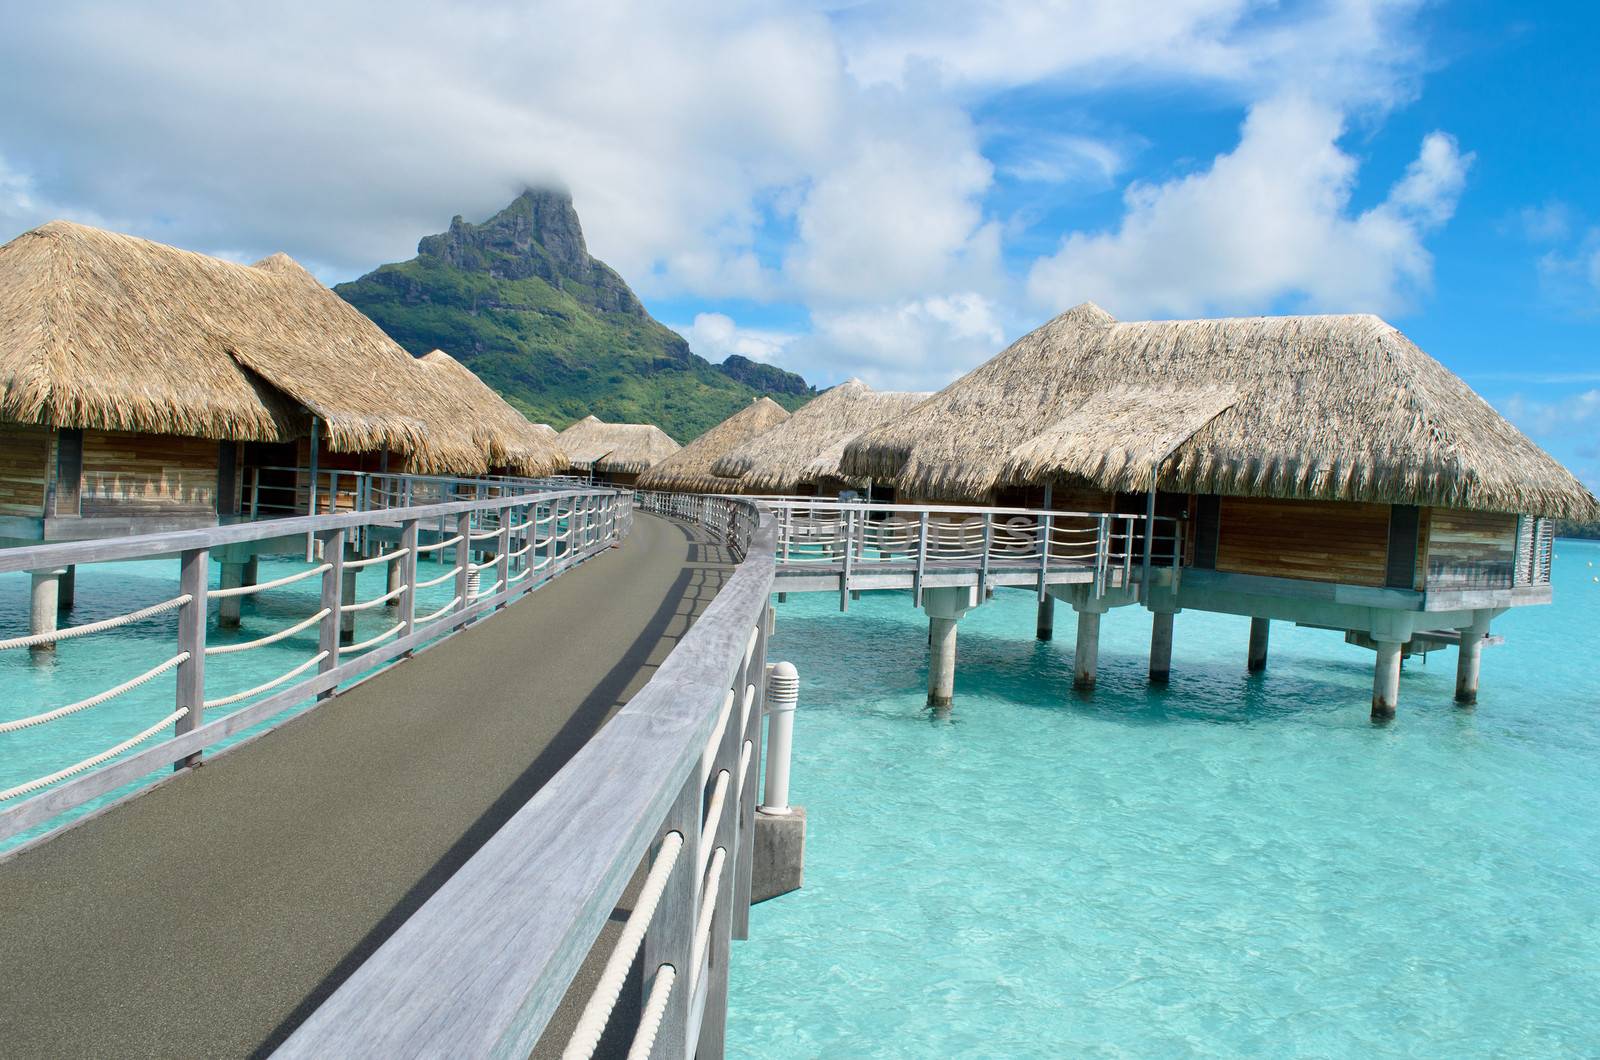 Luxury overwater vacation resort on Bora Bora by pljvv